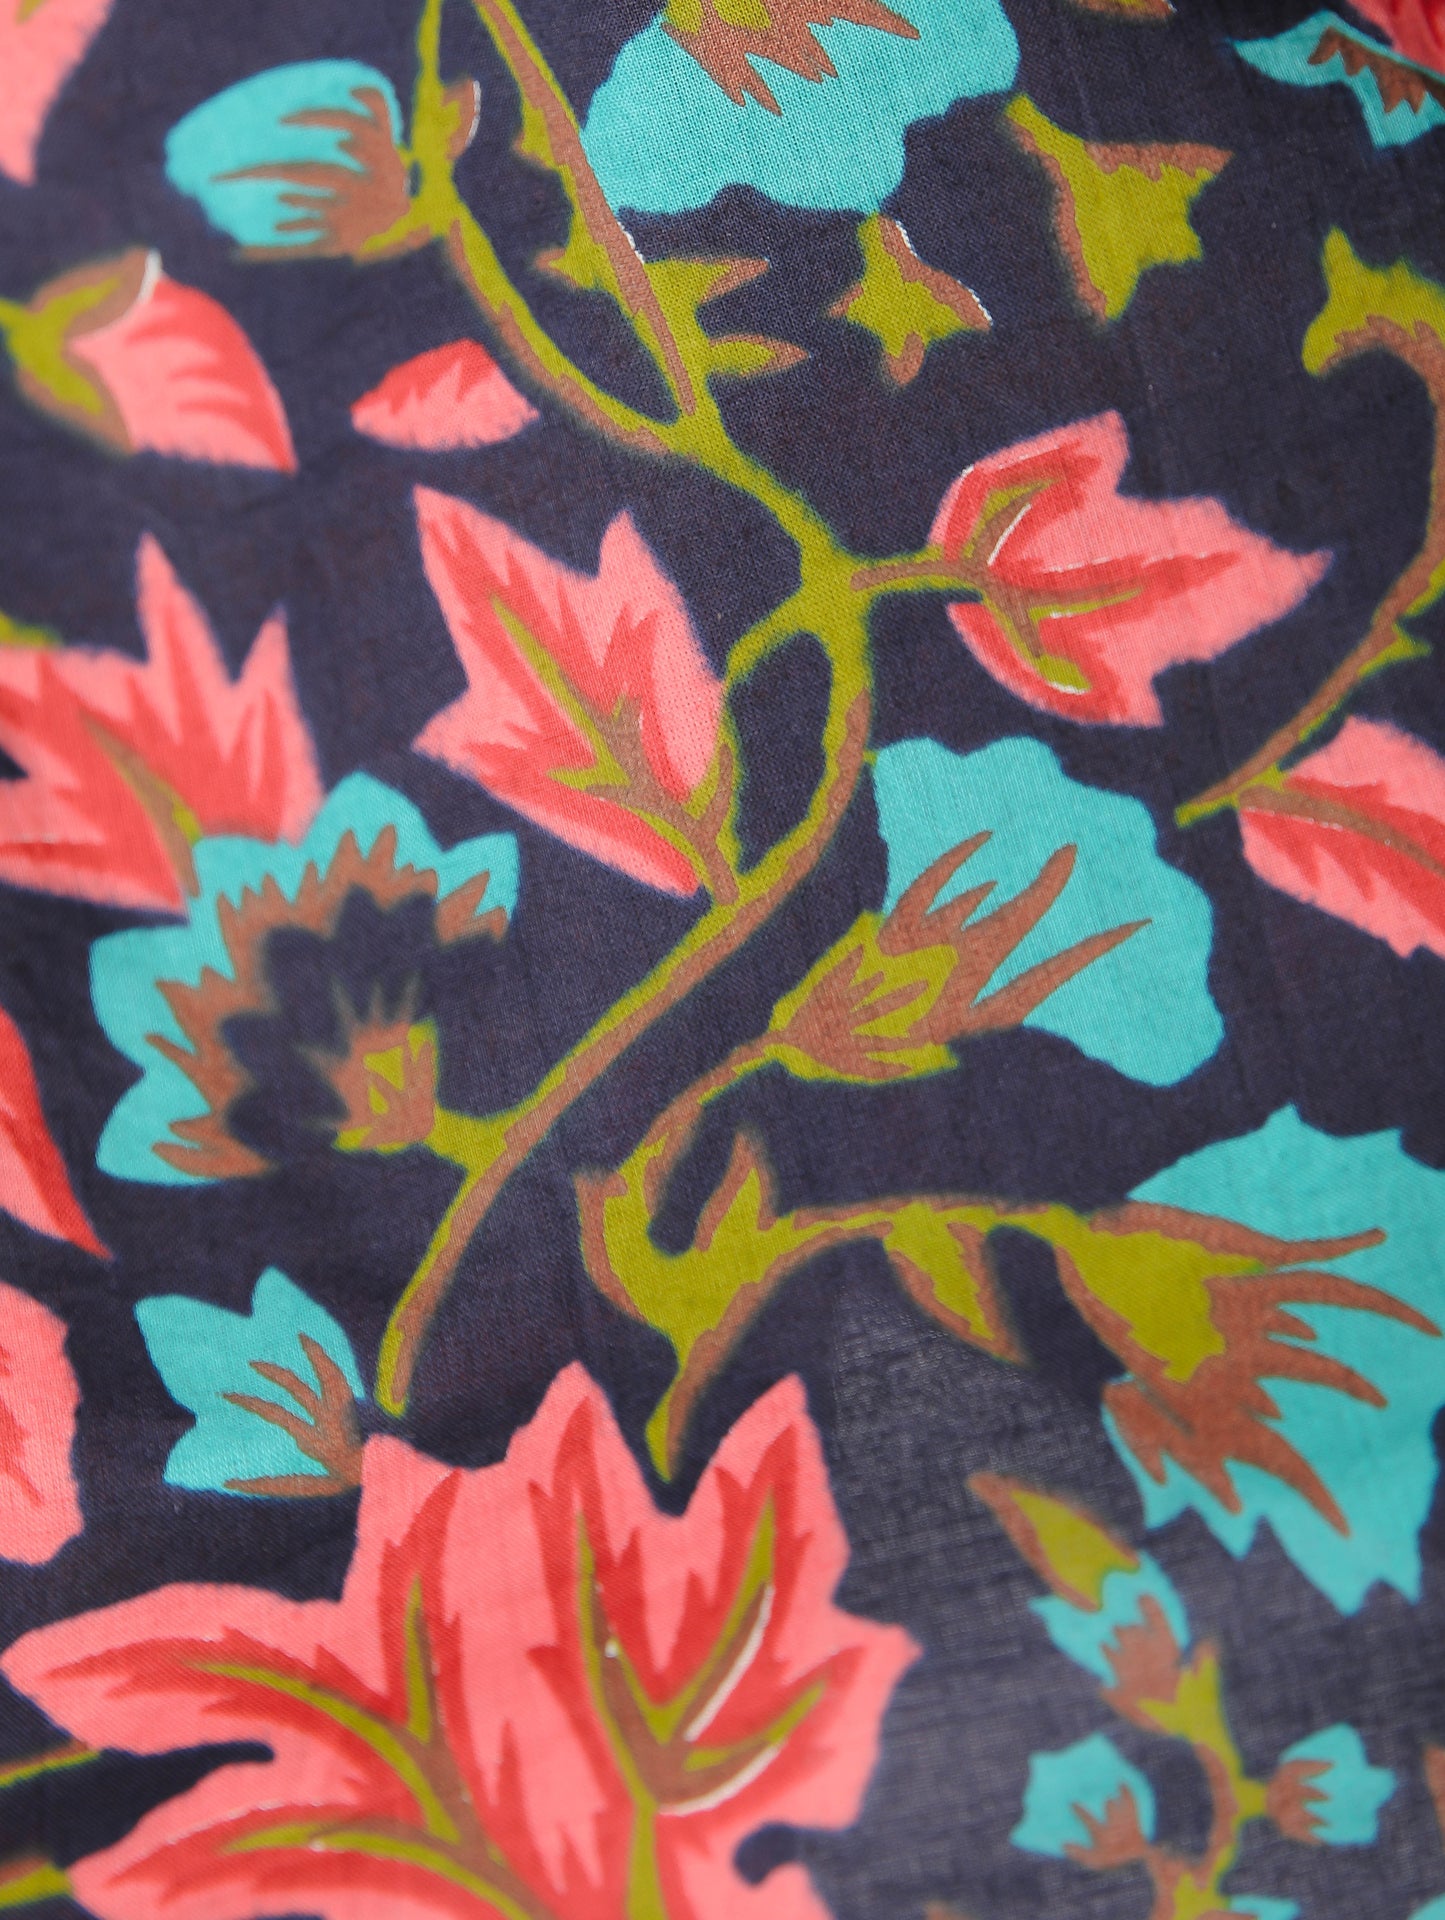 Floral Motifs on Black Cotton Kaftan Top Pant Set